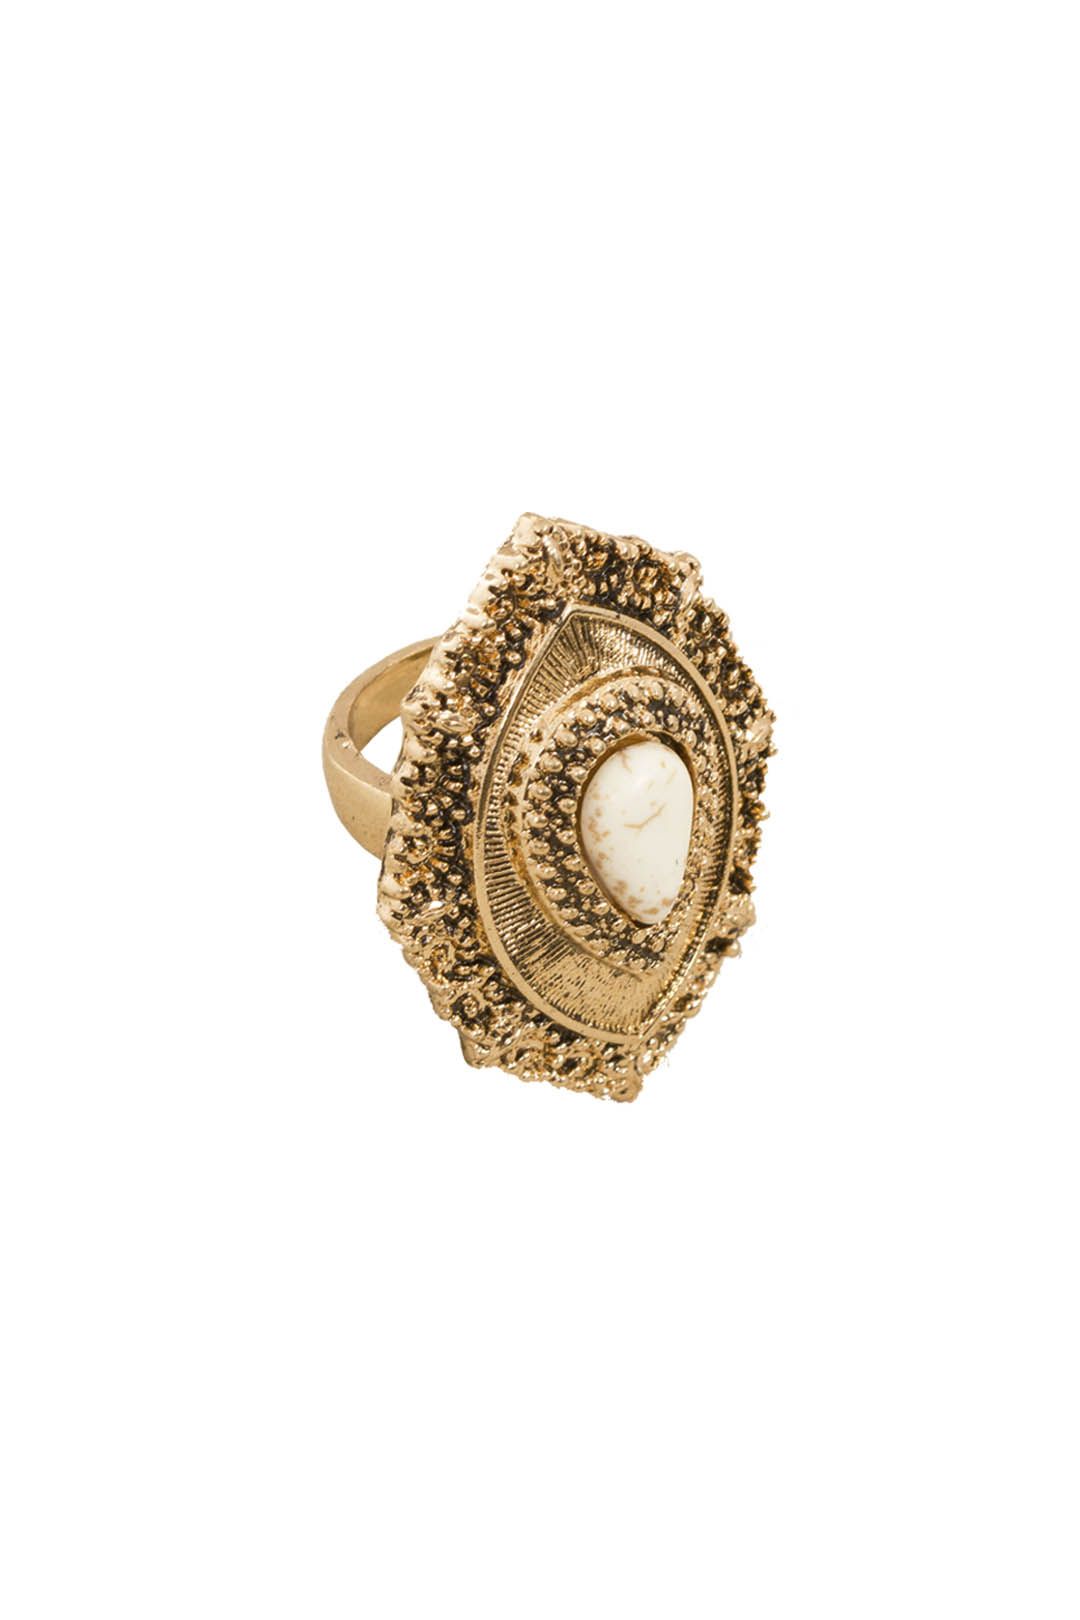 Adorne - Boho Stone Teardrop Ring - Natural Gold - Front